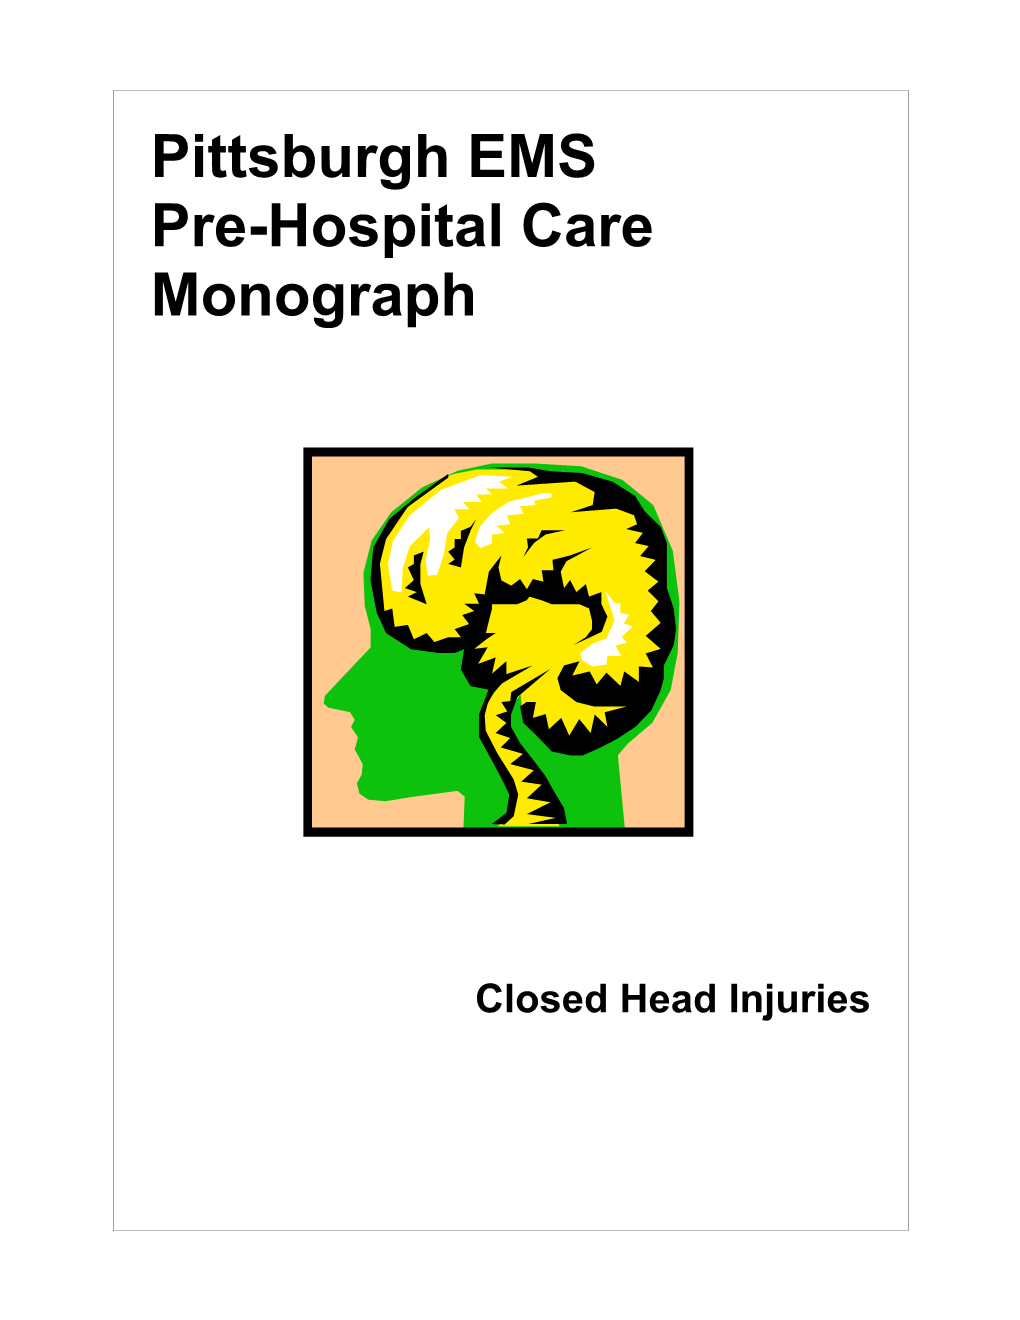 Closed Head Injury